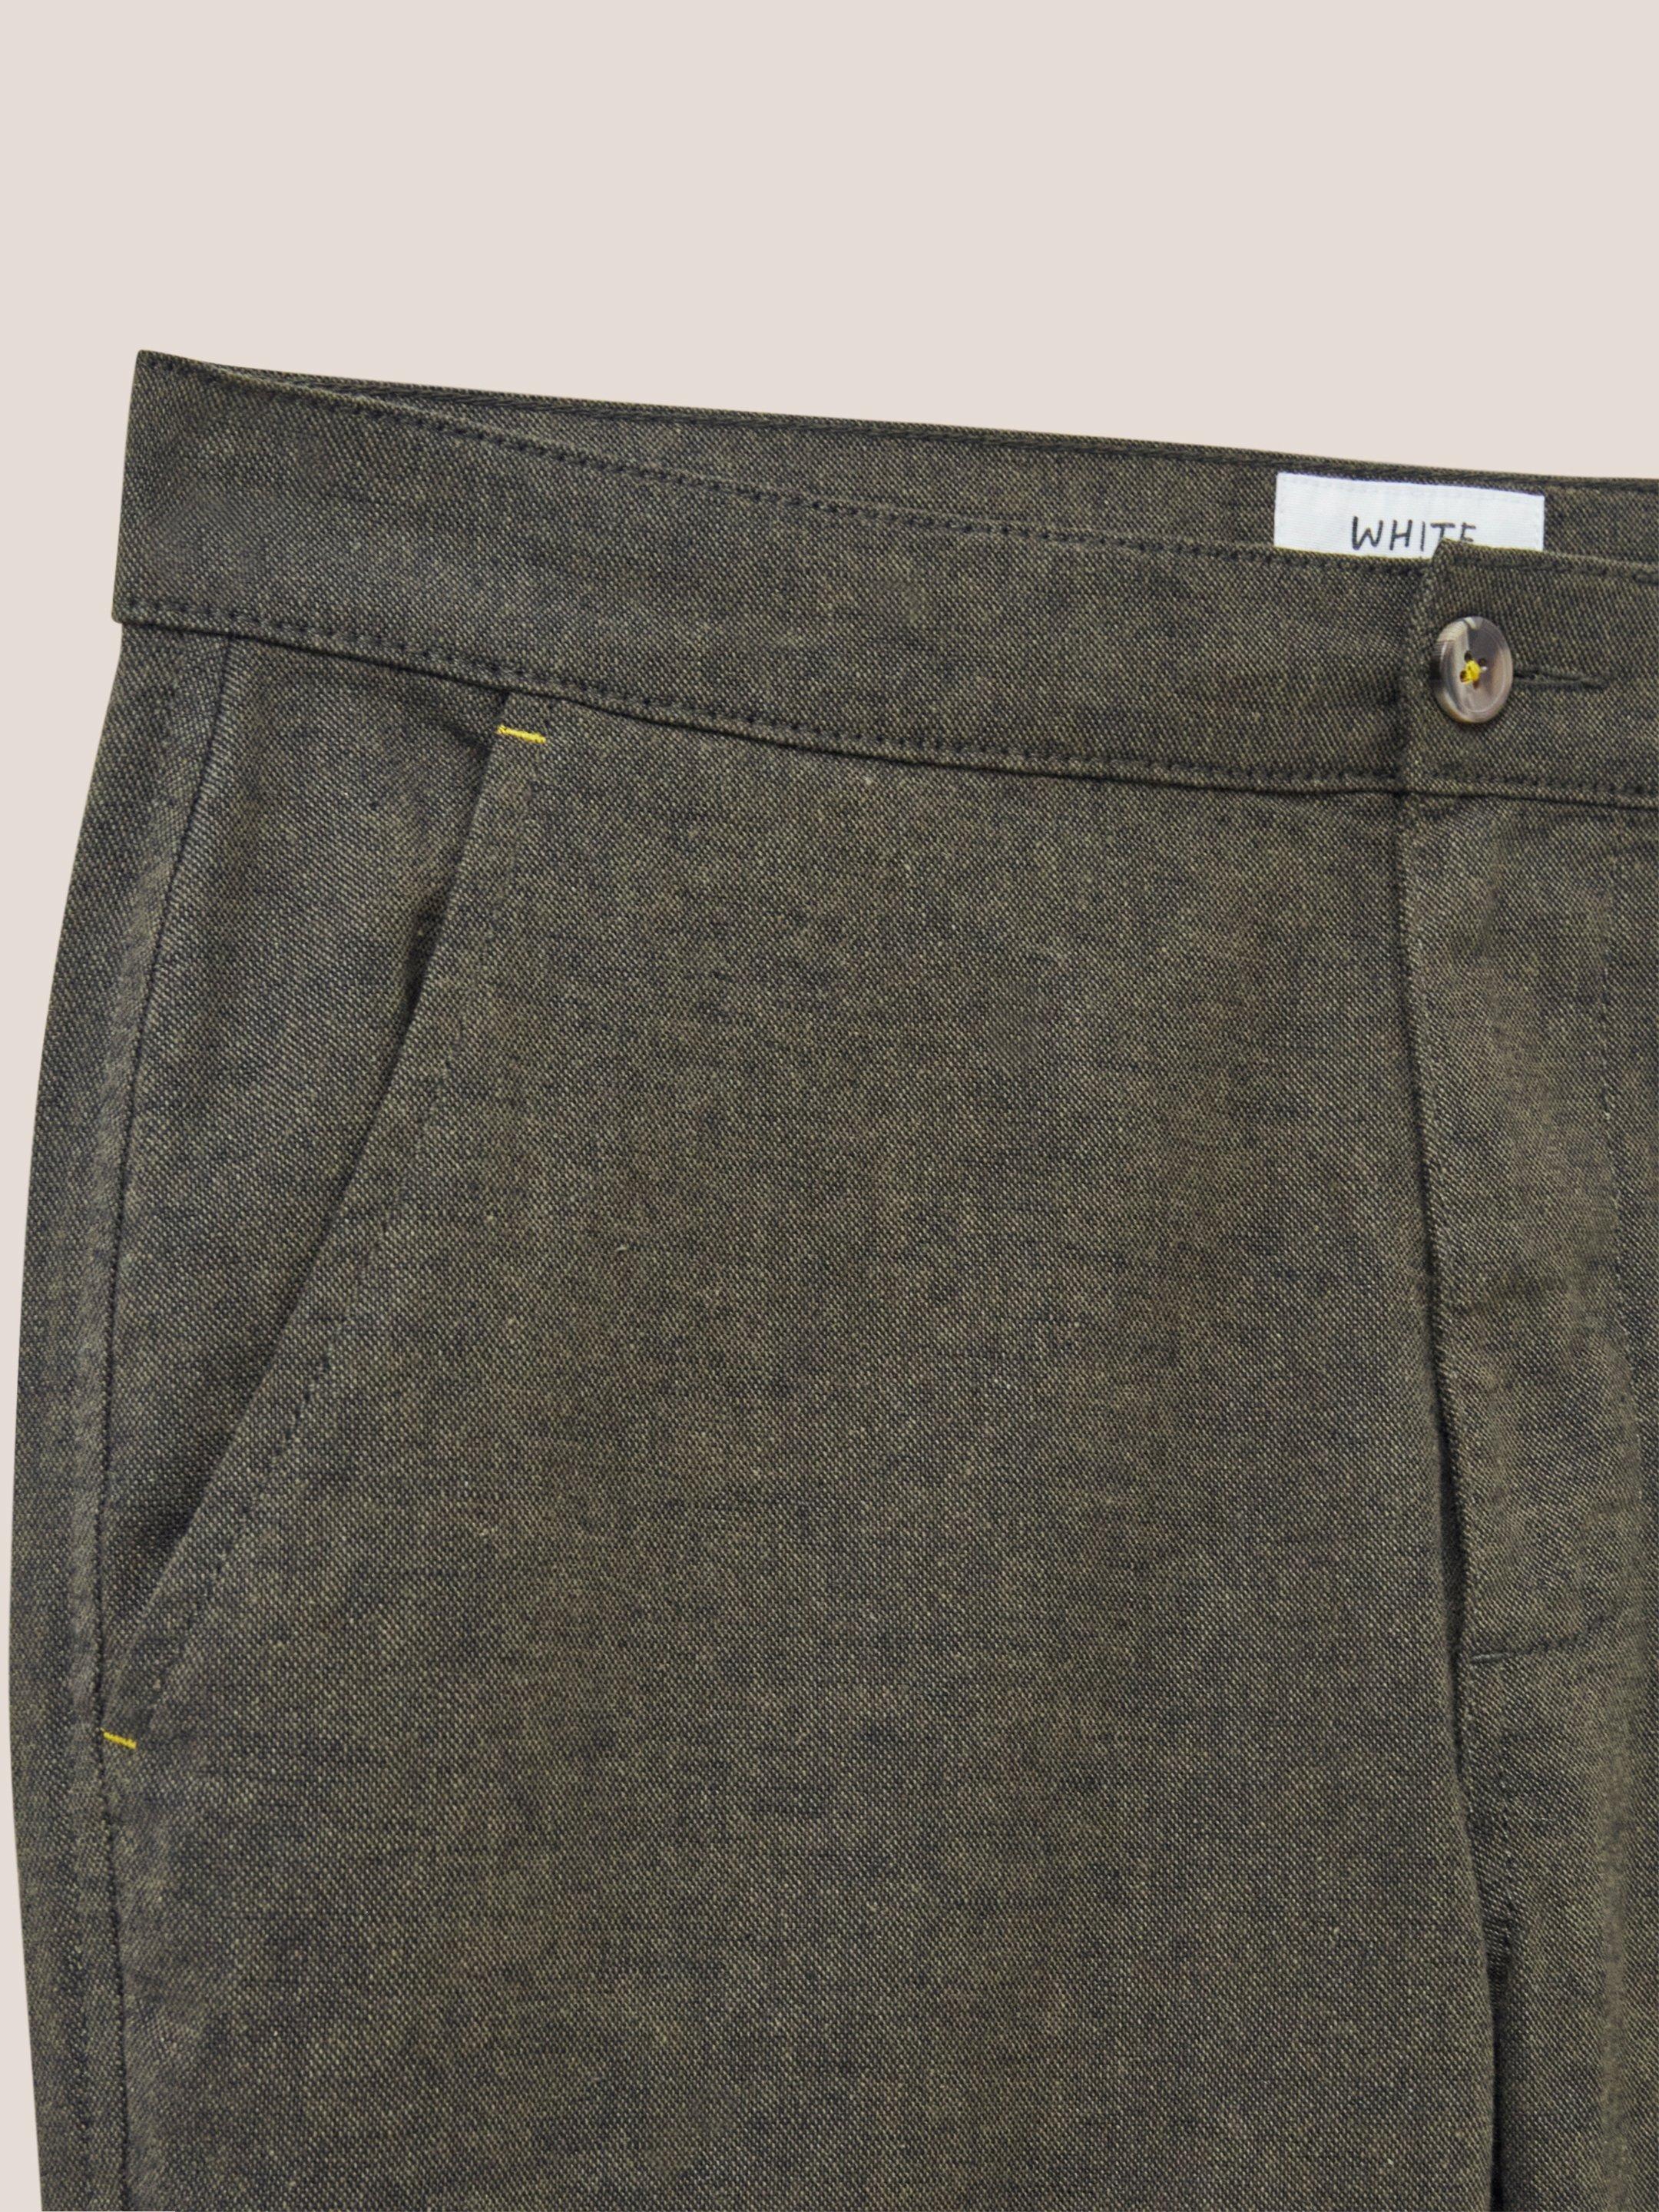 Blend Trouser Linen in KHAKI GRN - FLAT DETAIL